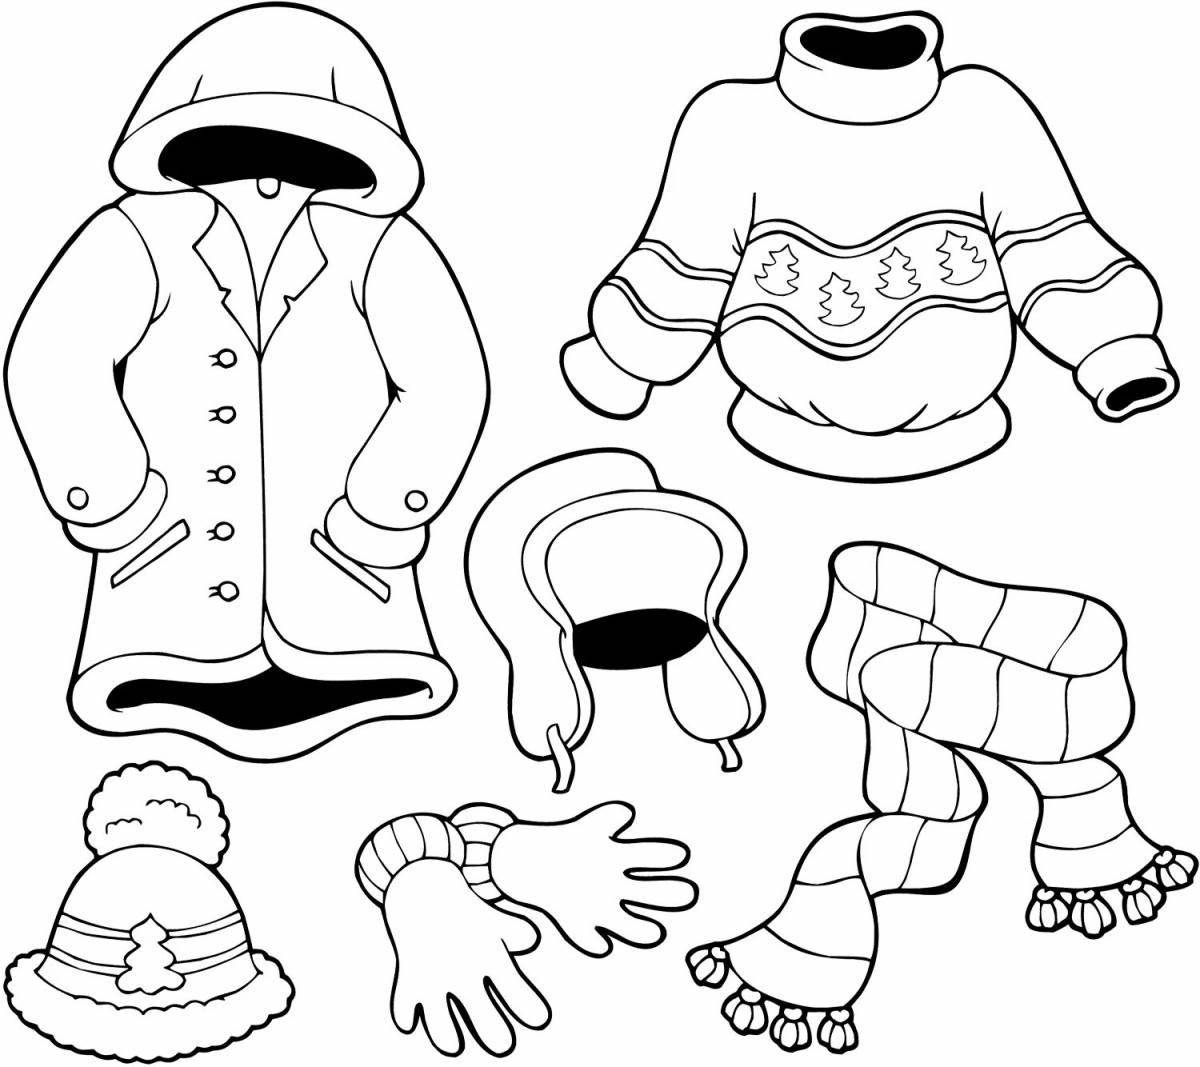 Fun coloring book boy in winter clothes